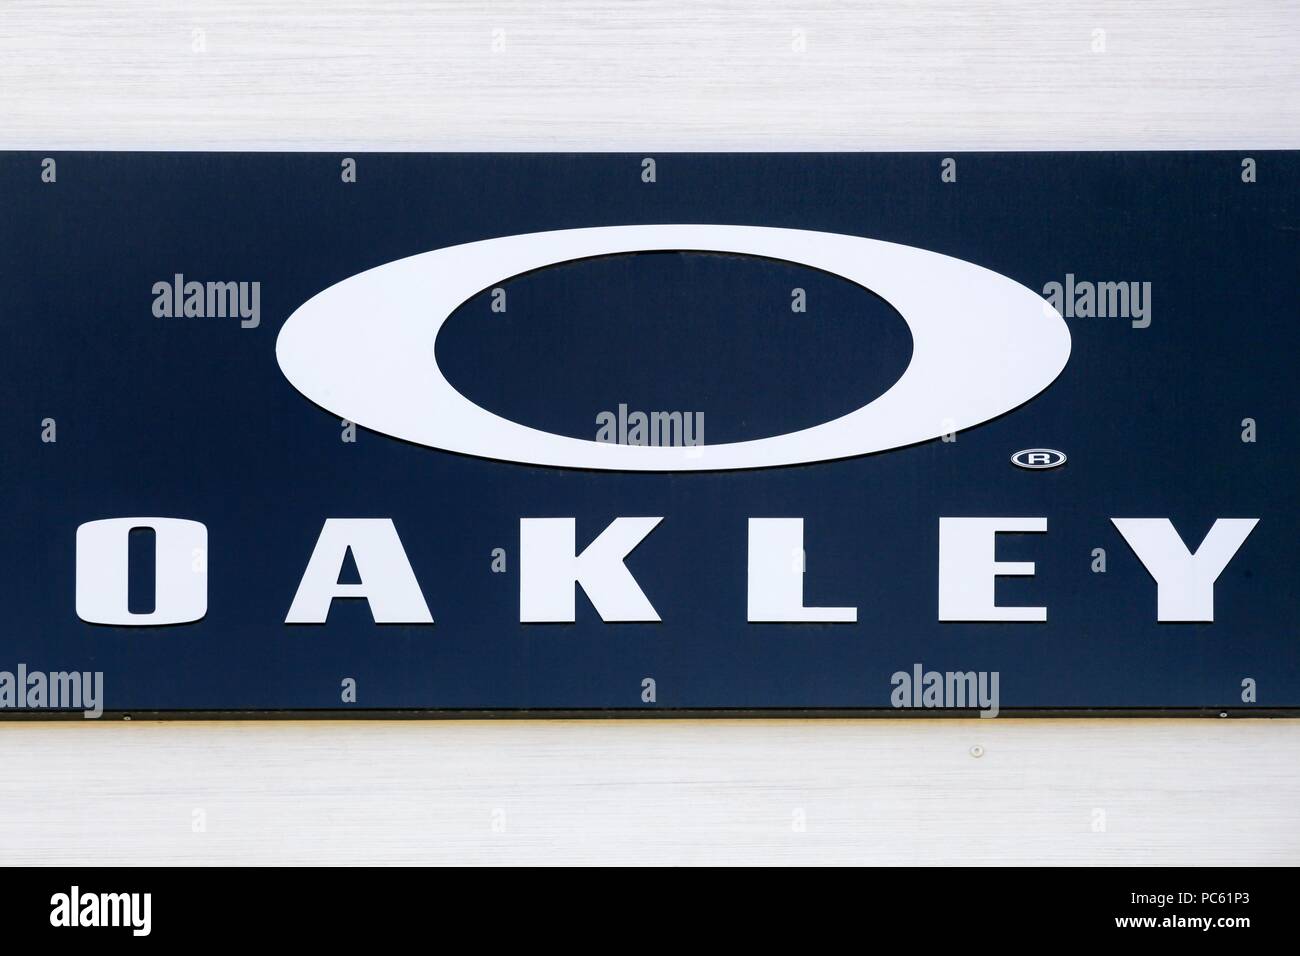 oakley glasses logo